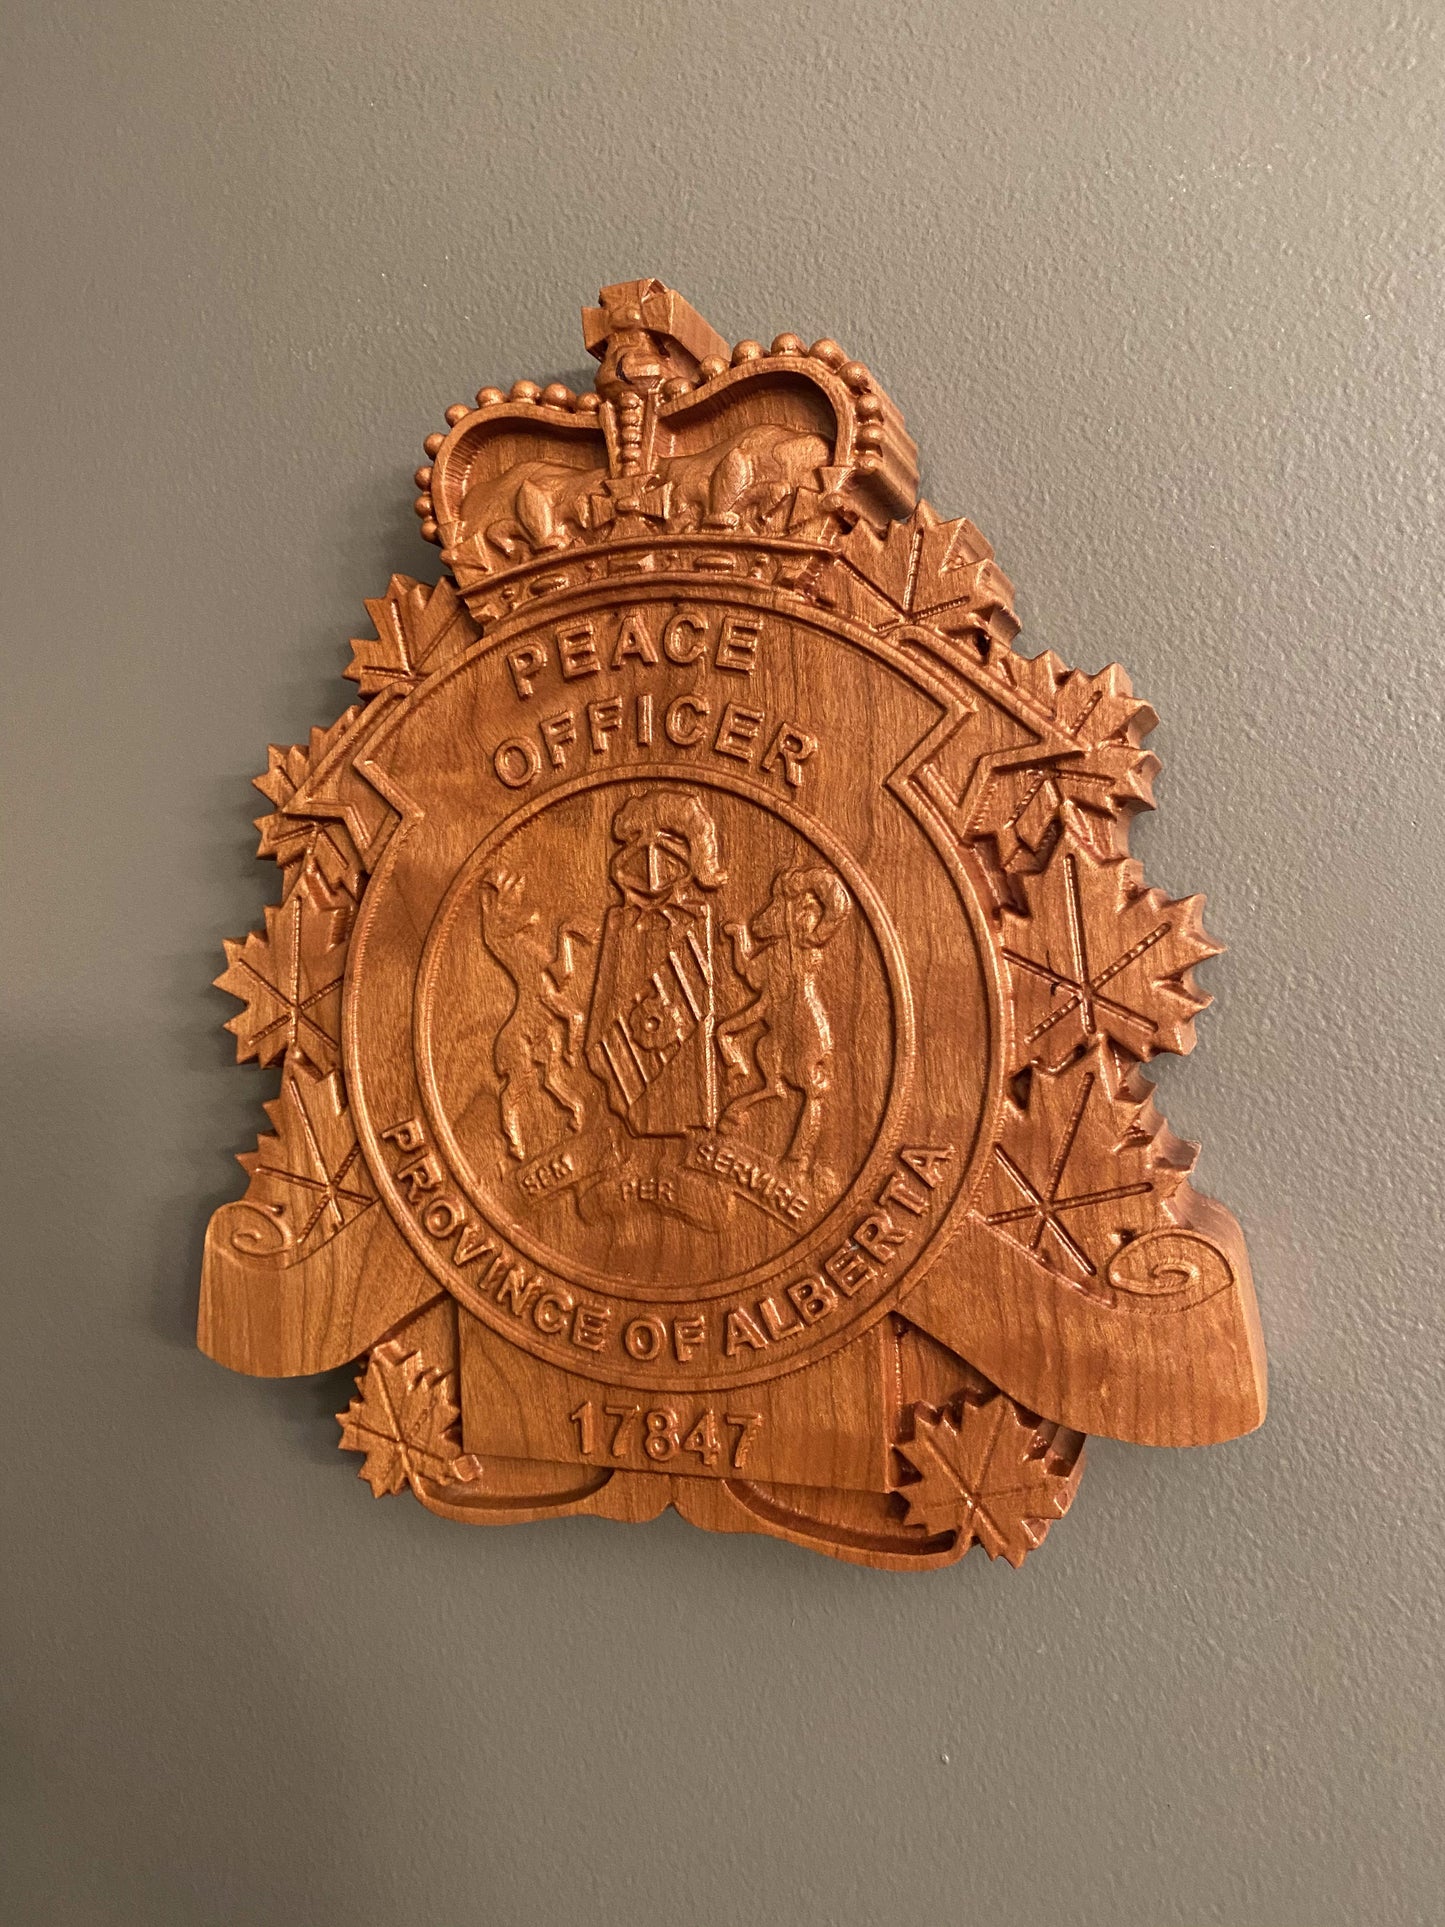 Alberta Community Peace Officer Wooden Badge